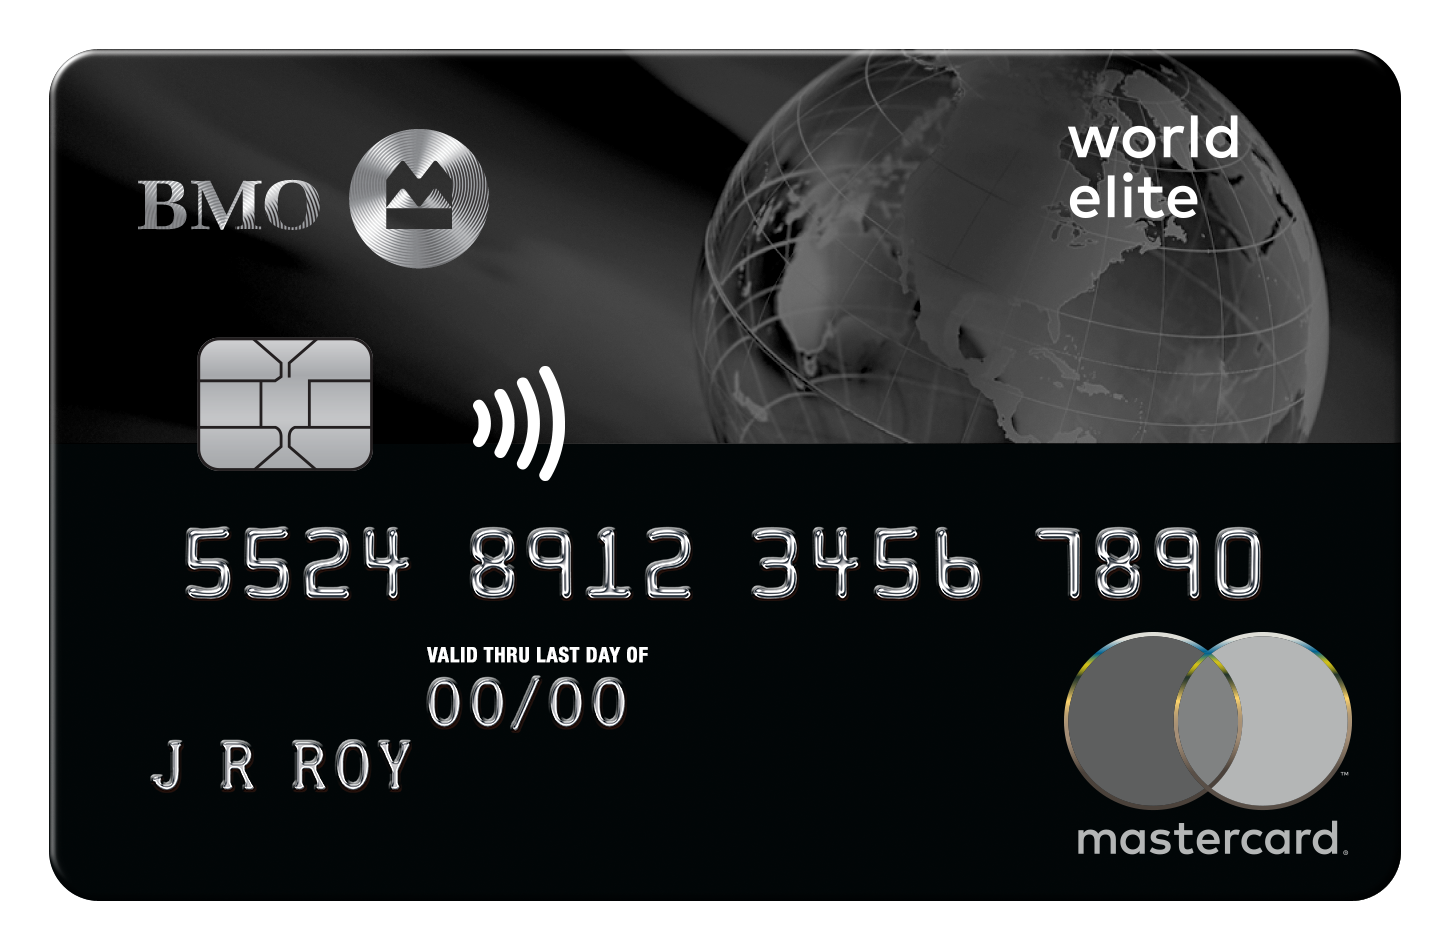 bmo world elite mastercard travel rewards